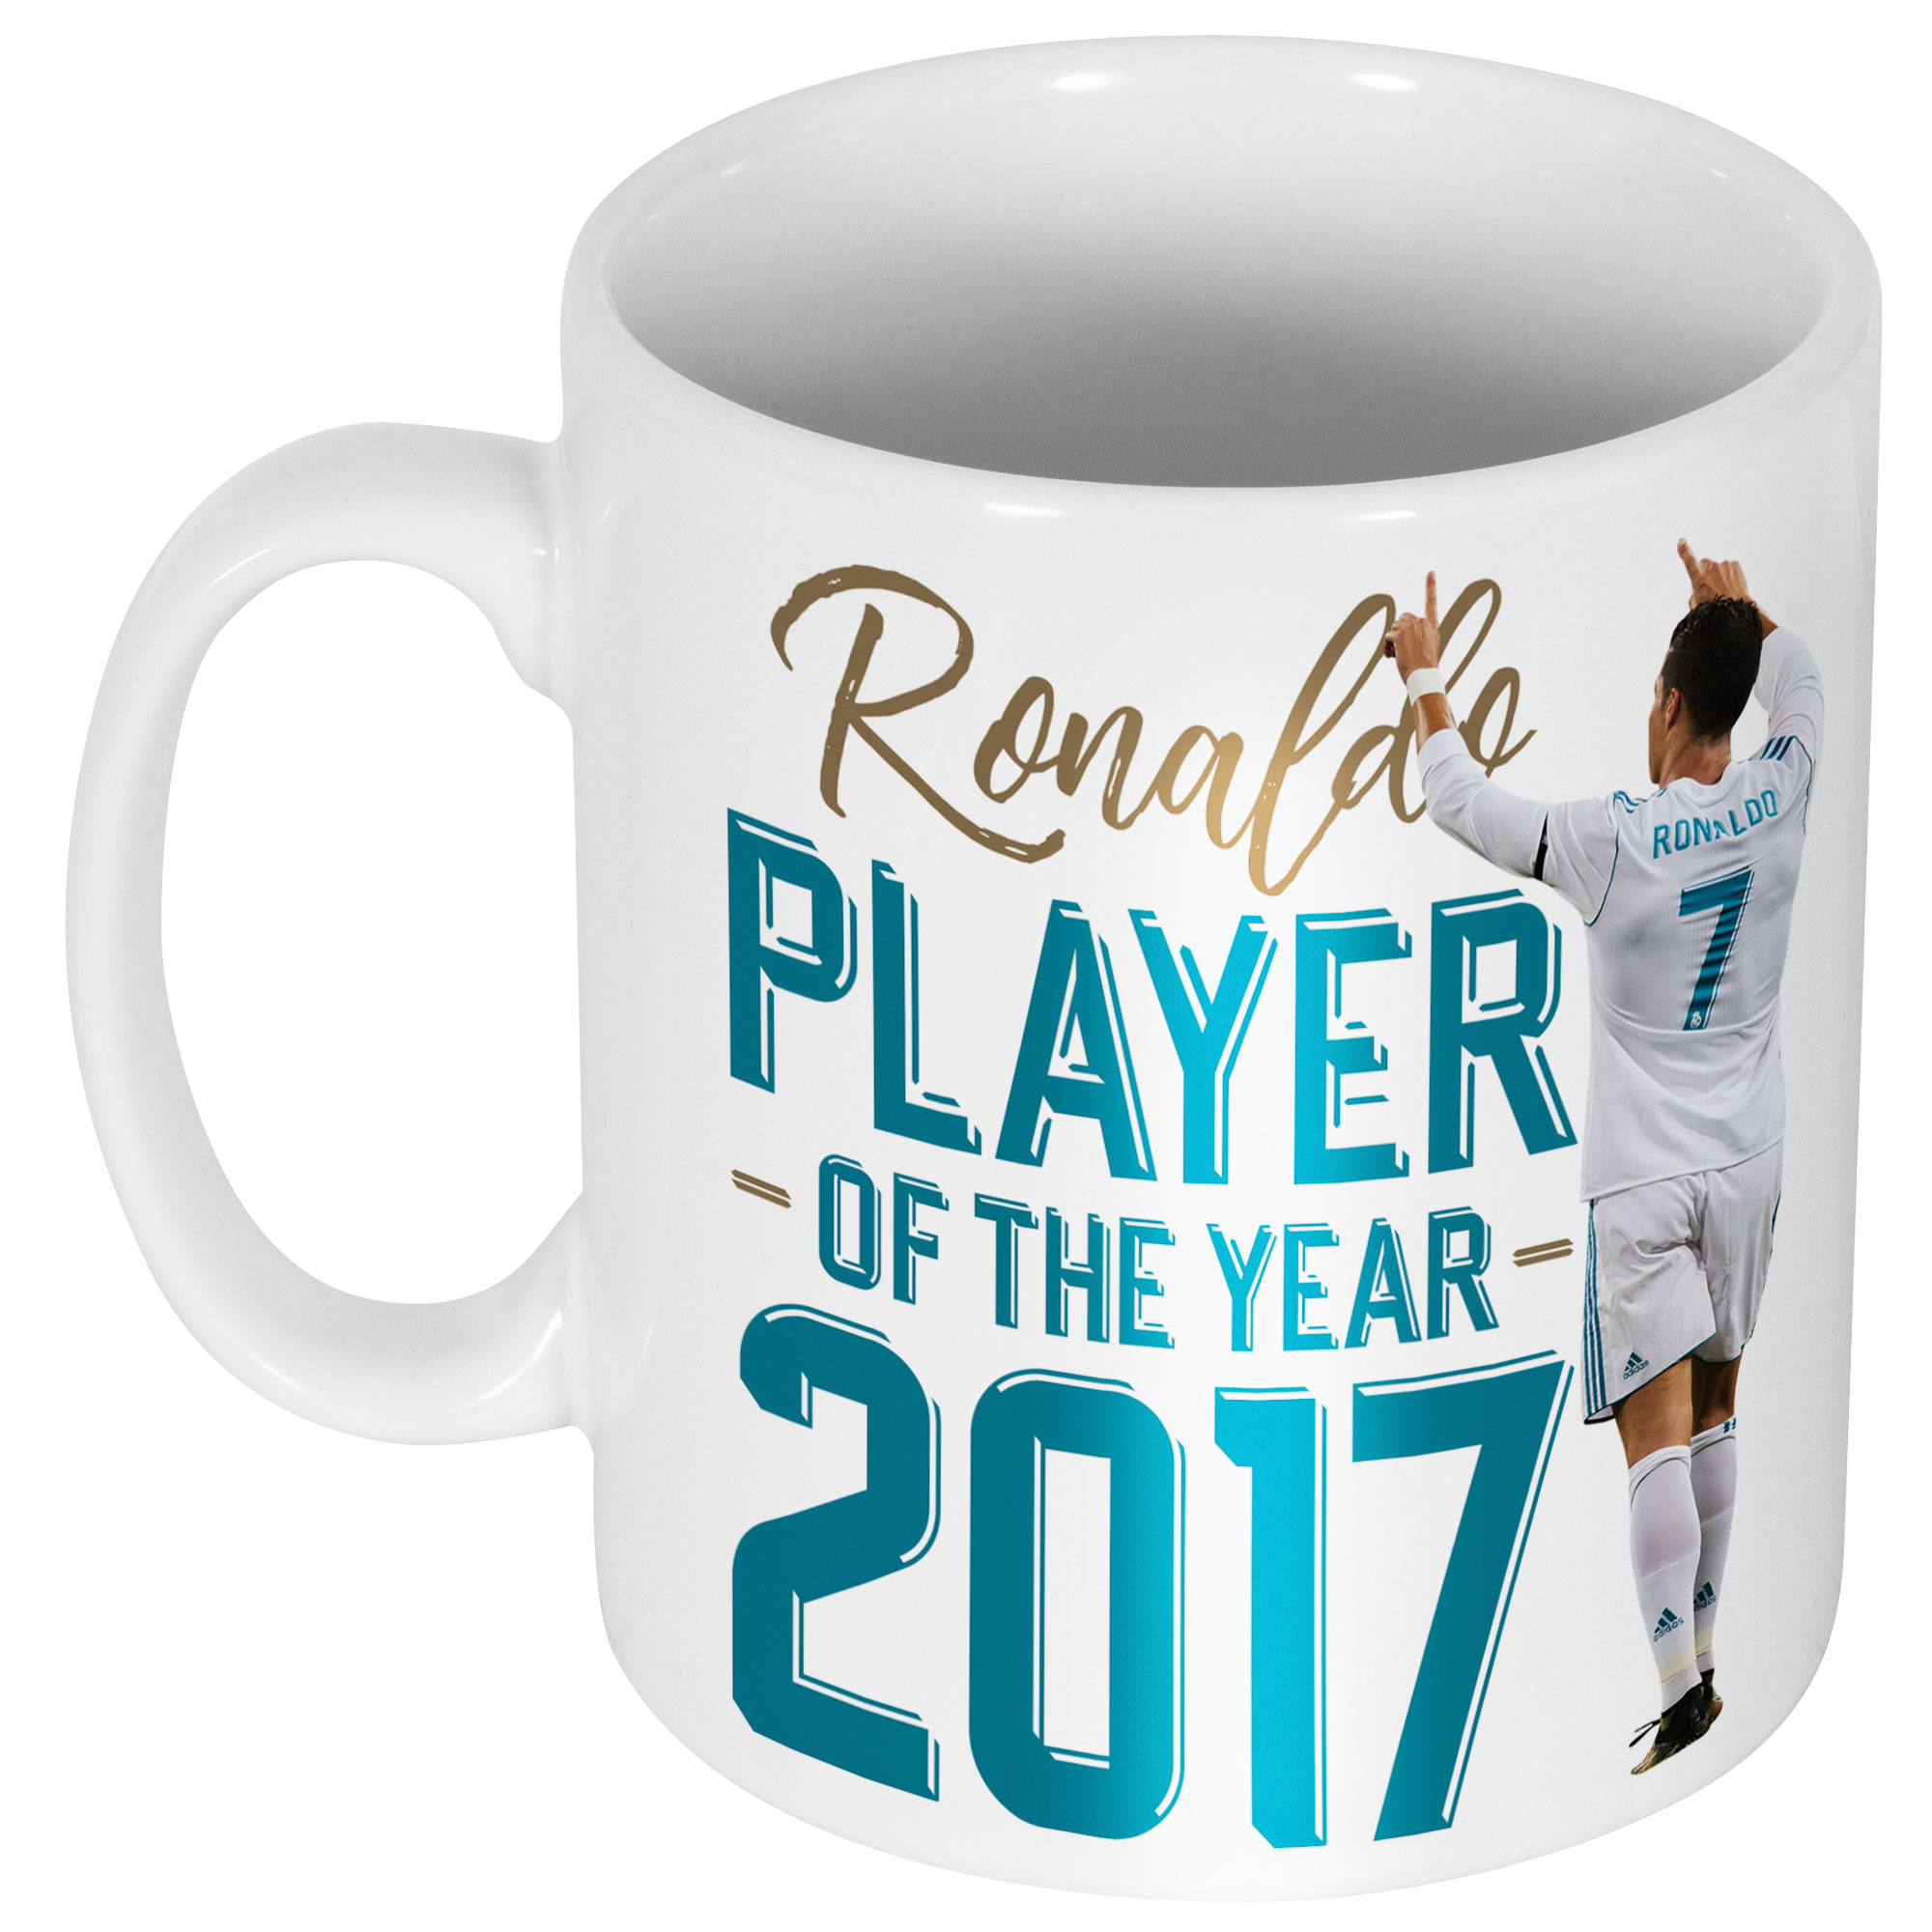 Ronaldo Player Of The Year 2017 Mok